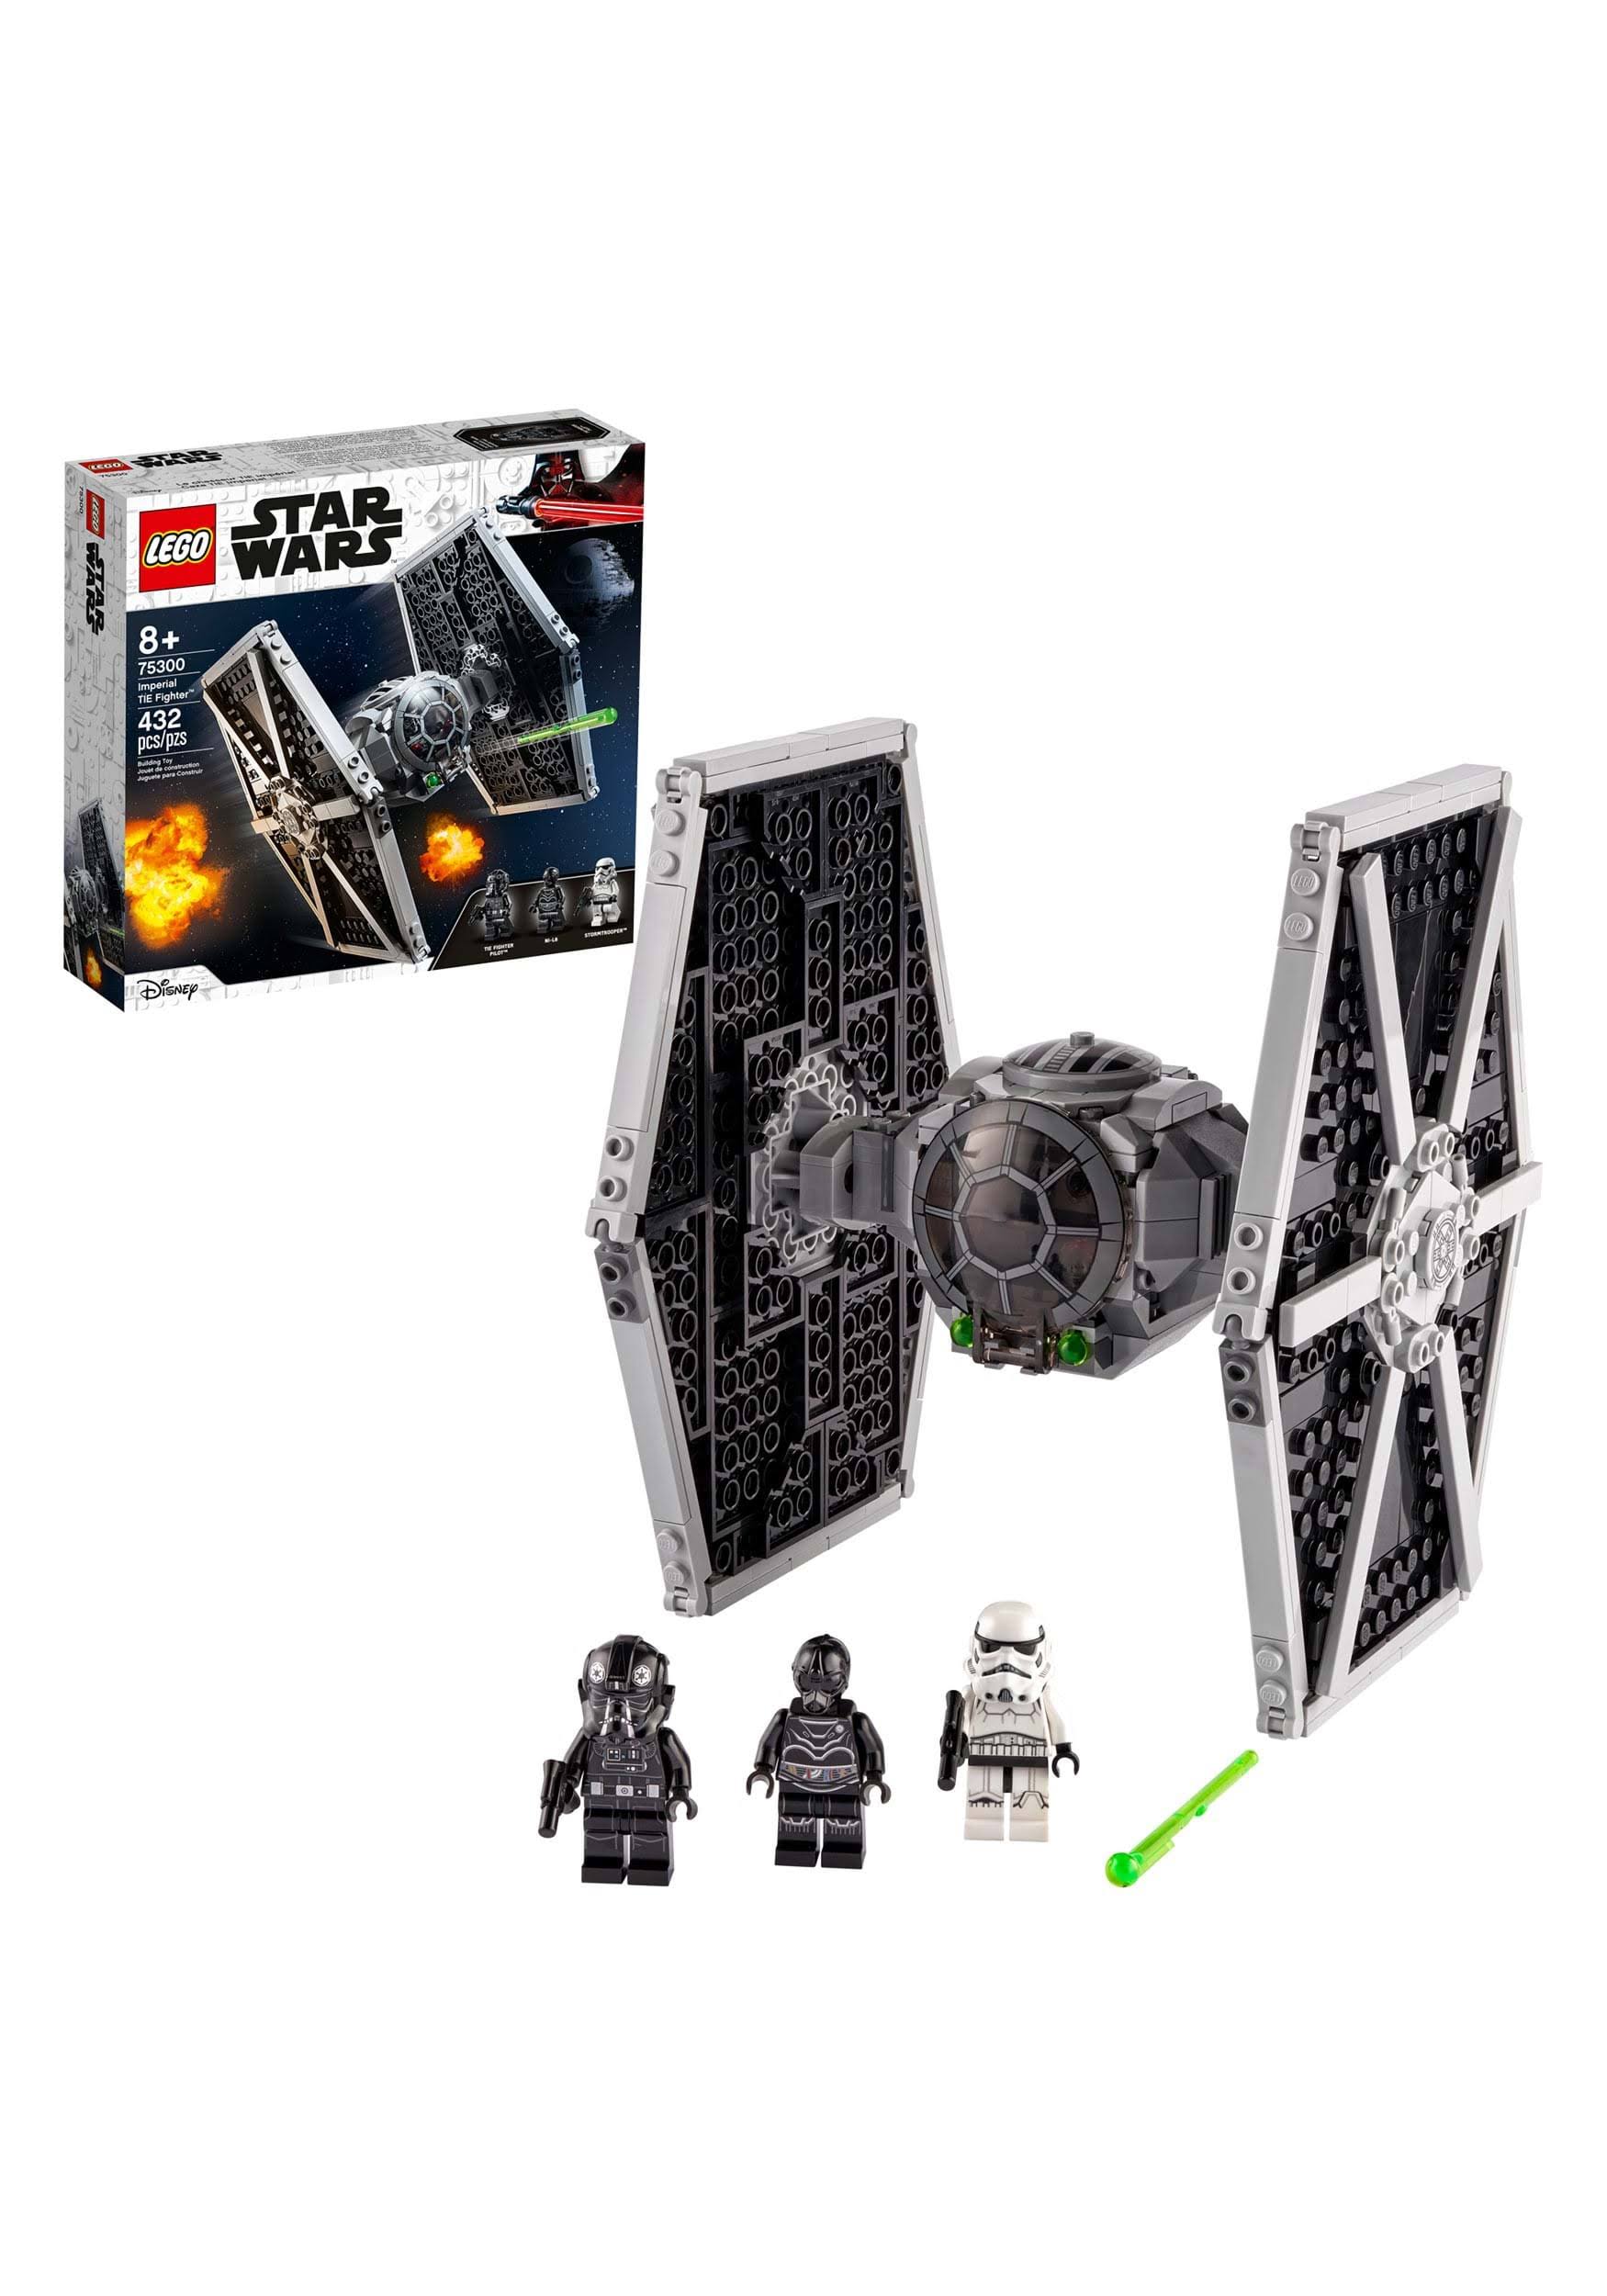 LEGO Star Wars Imperial Tie Fighter 75300 Building Set